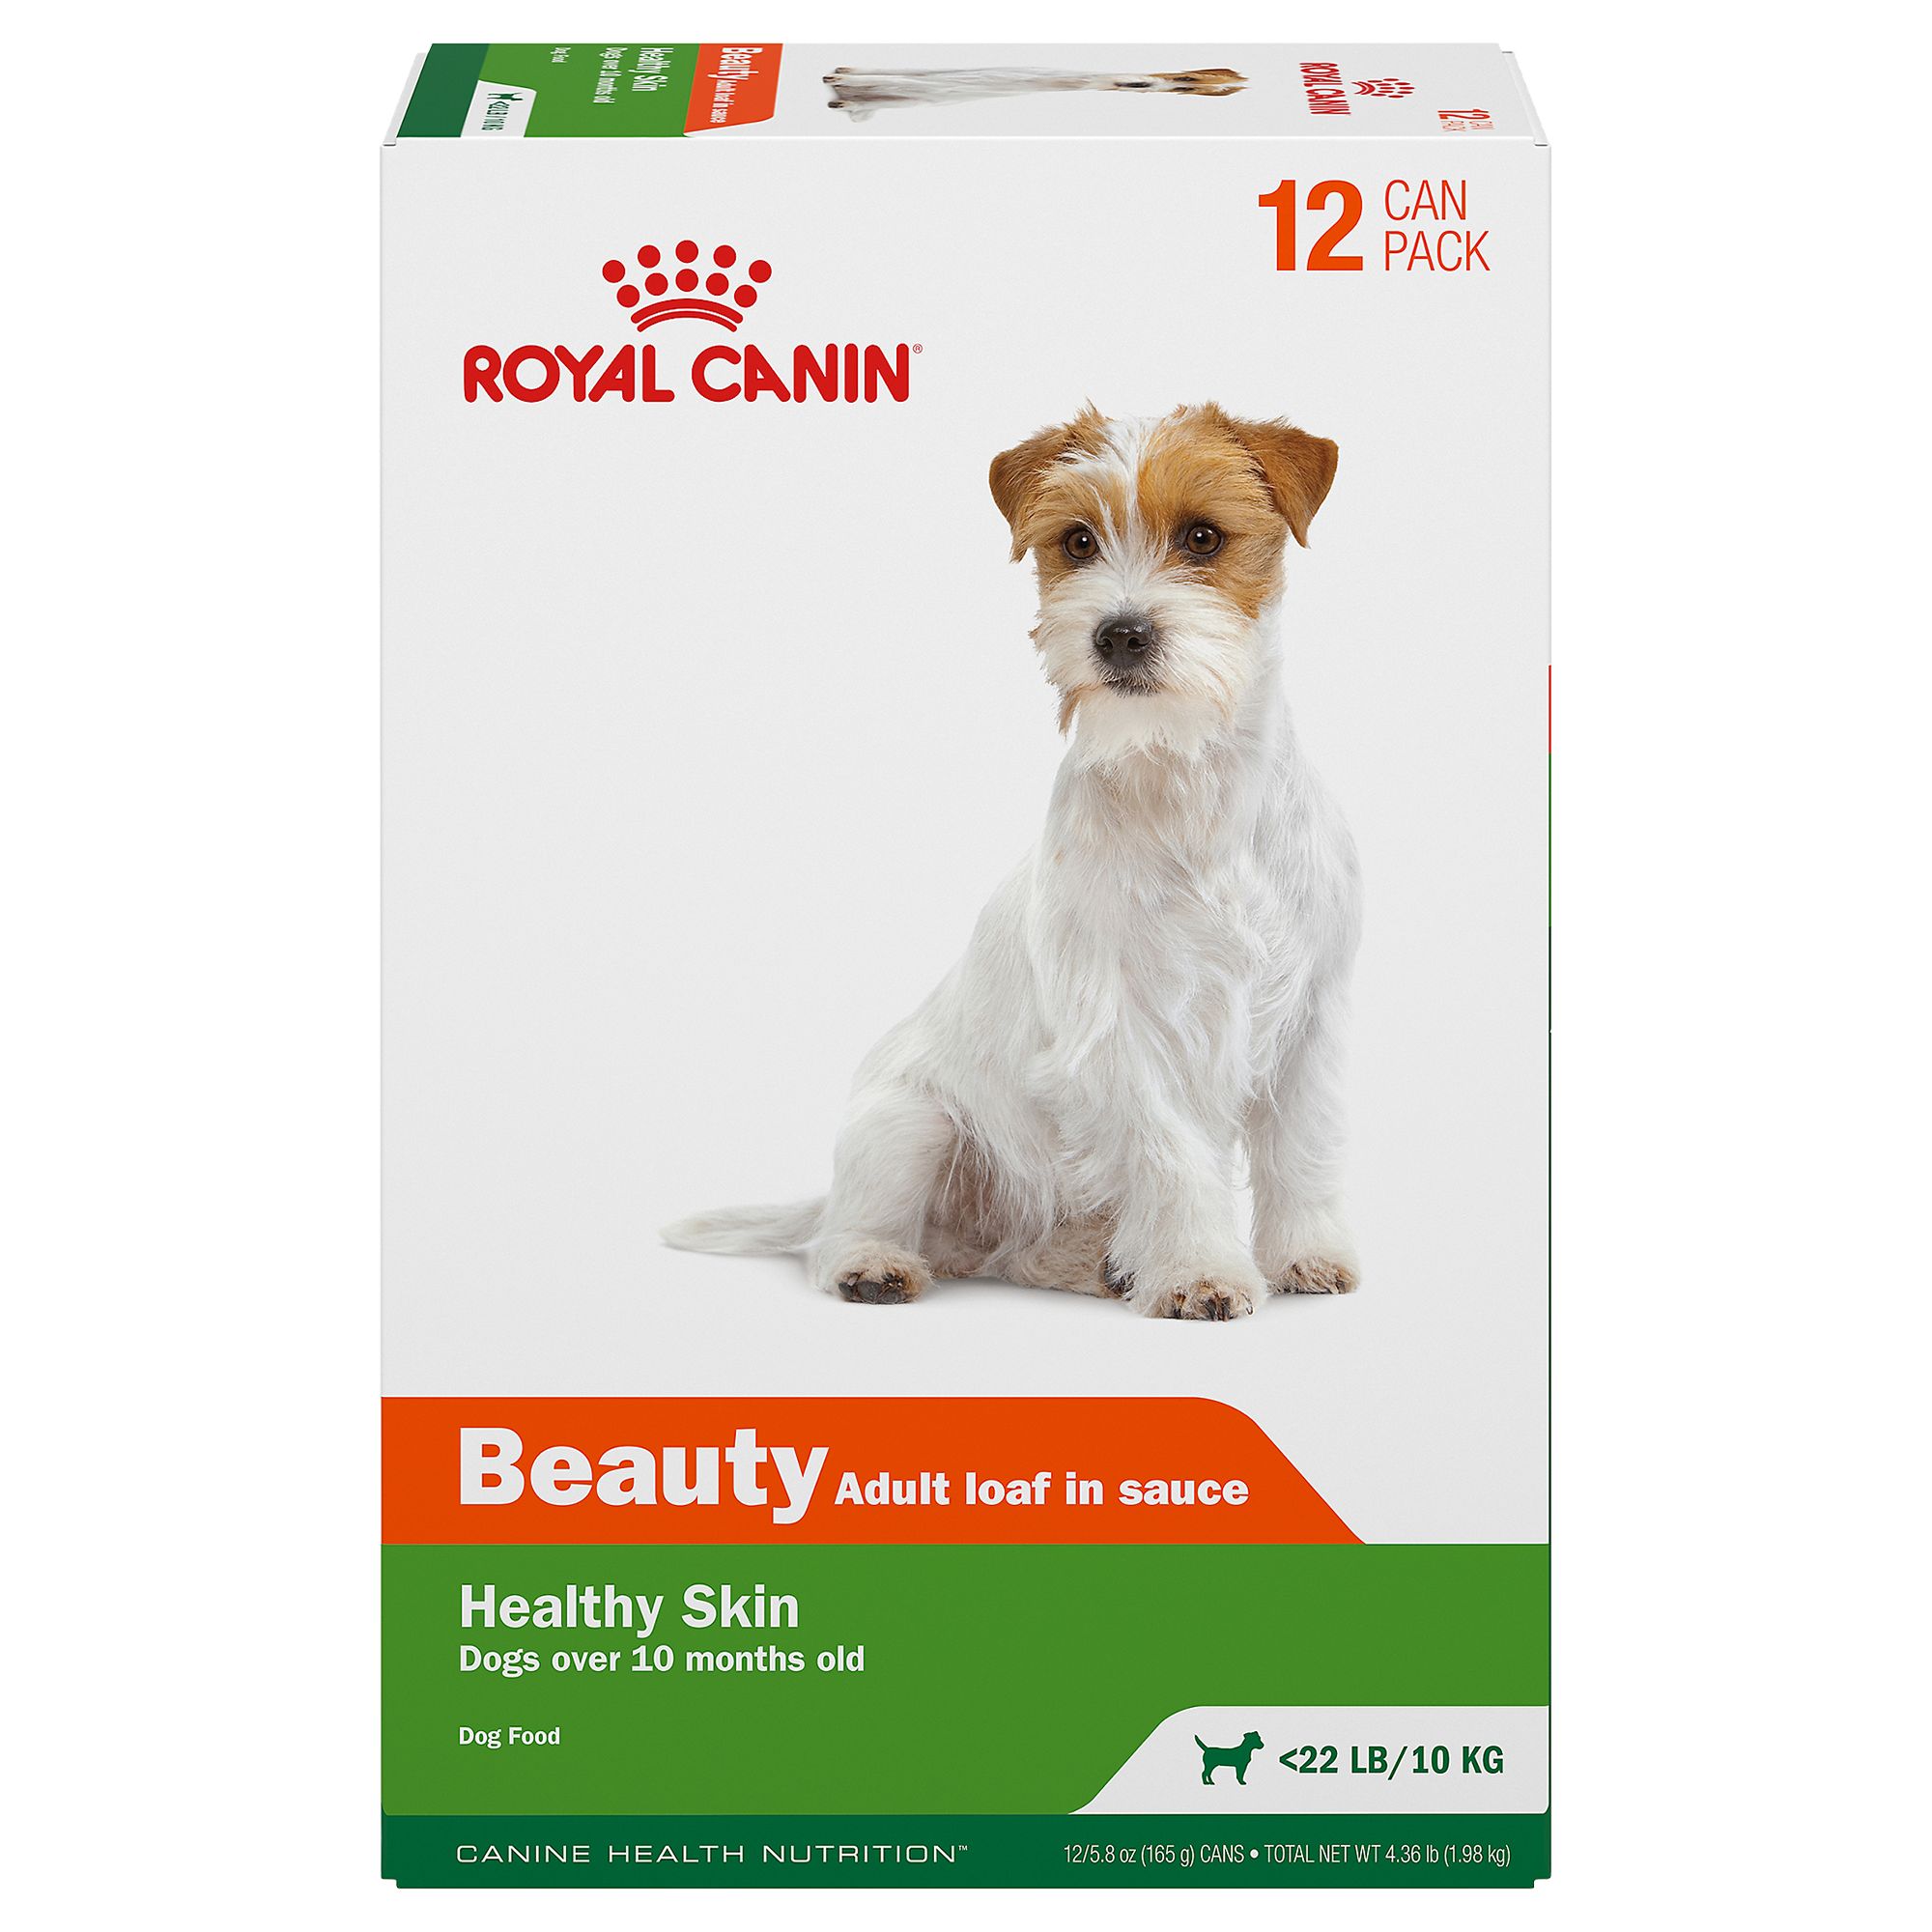 royal canin french bulldog petsmart